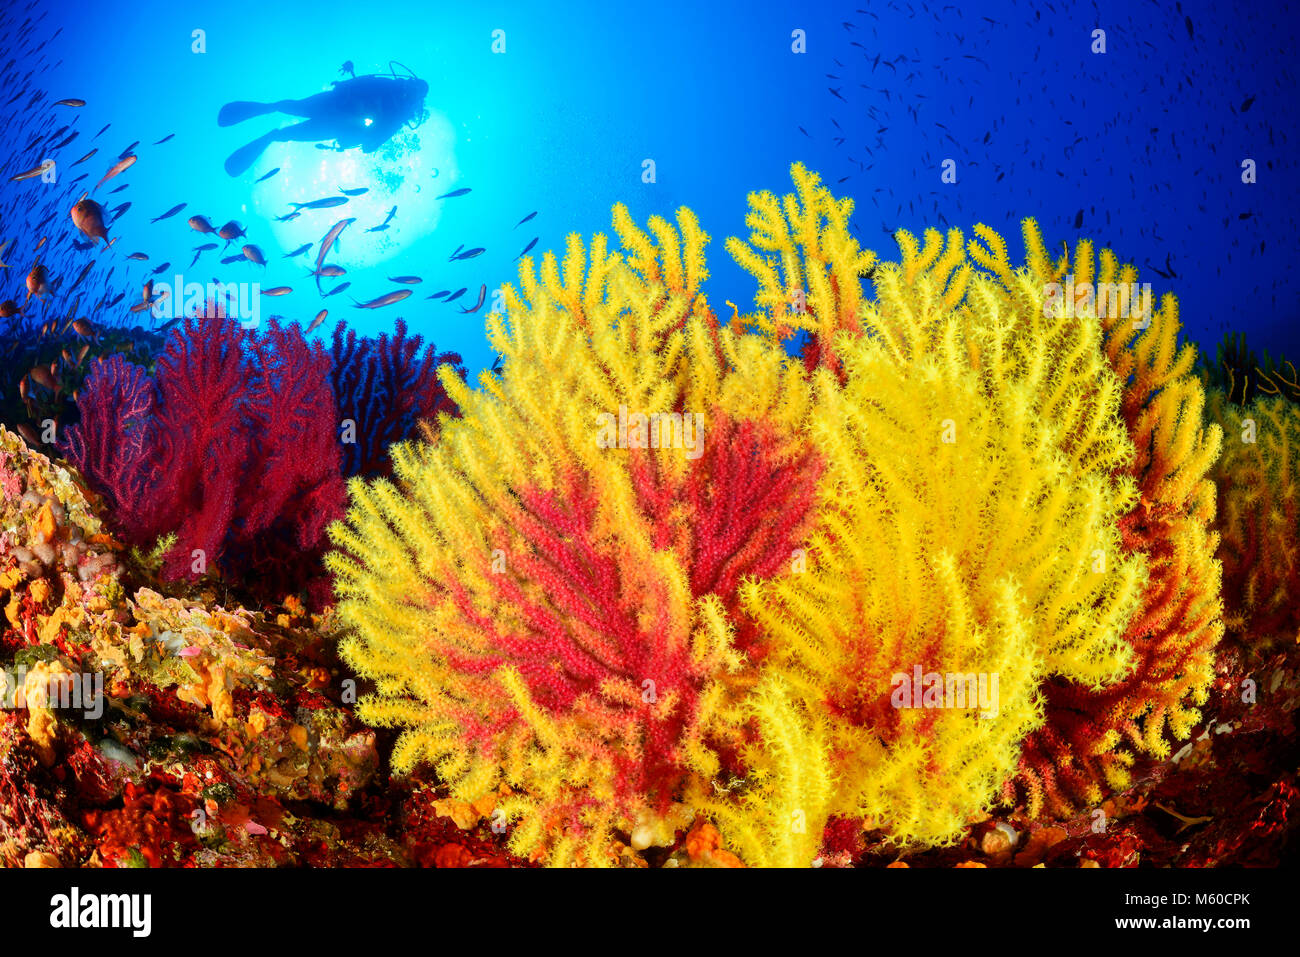 Coral reef with Violescent Sea-whip (Paramuricea clavata) and scuba diver. Adriatic Sea, Mediterranean Sea, Island Susac, Nature Prk Lastovo, Dalmatia, Croatia, MR Yes Stock Photo